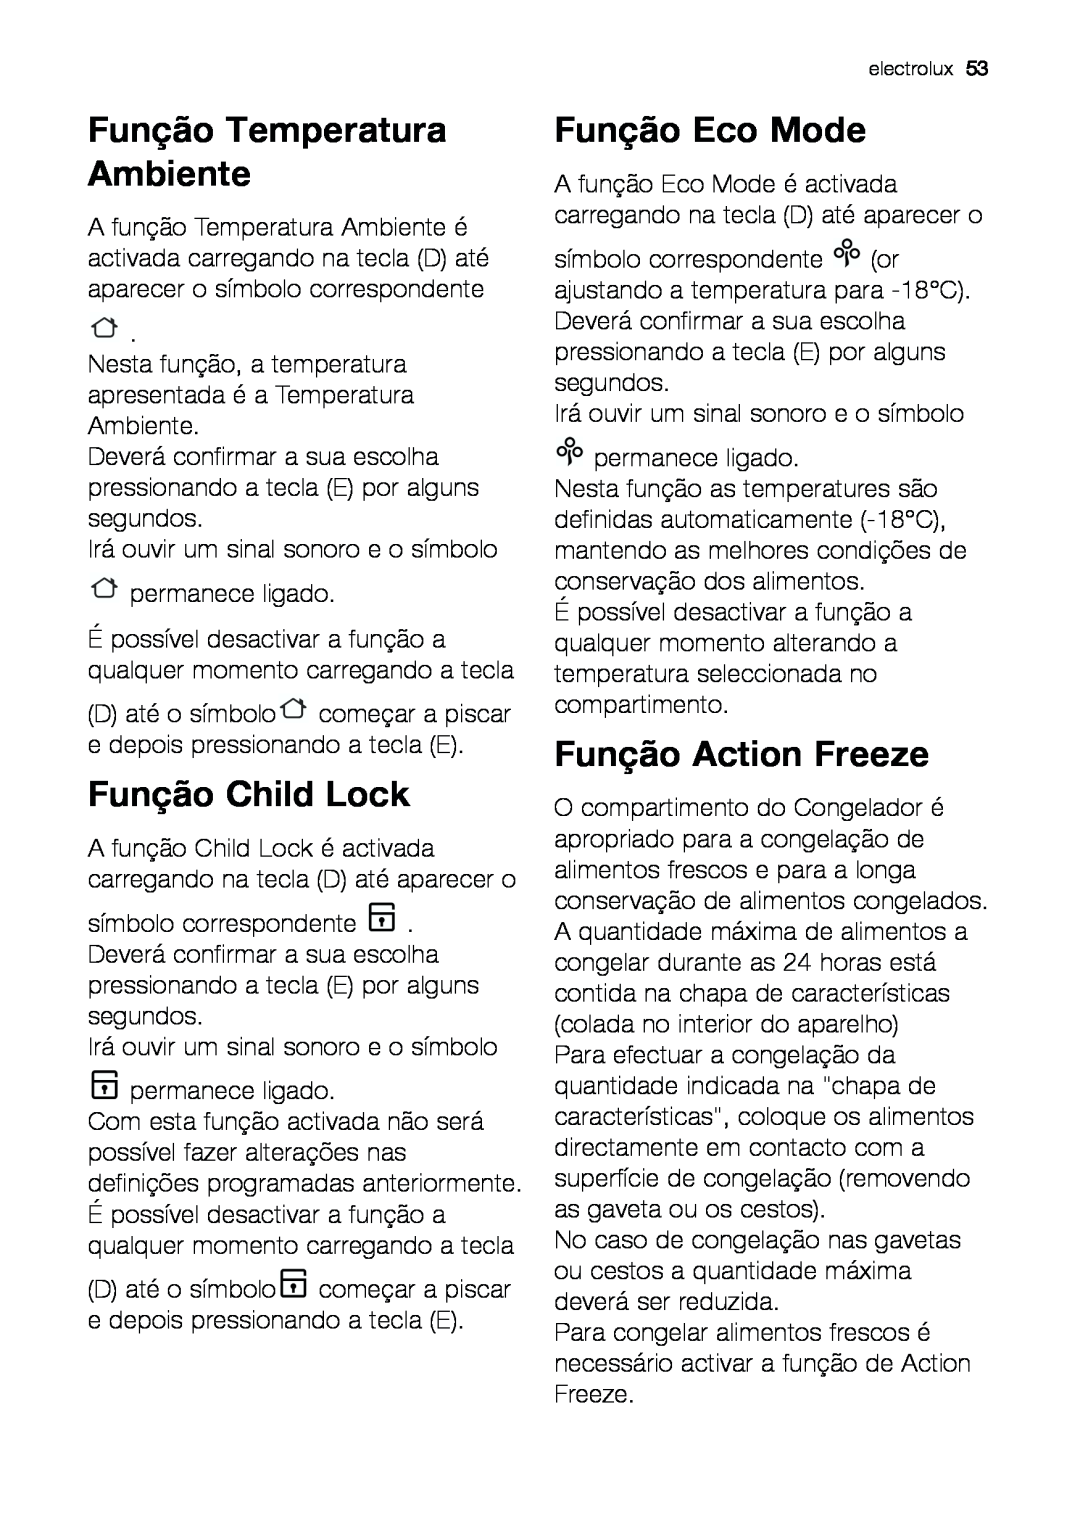 Electrolux EUF 27391 X manual Função Child Lock, Função Eco Mode, Função Action Freeze, Função Temperatura Ambiente 